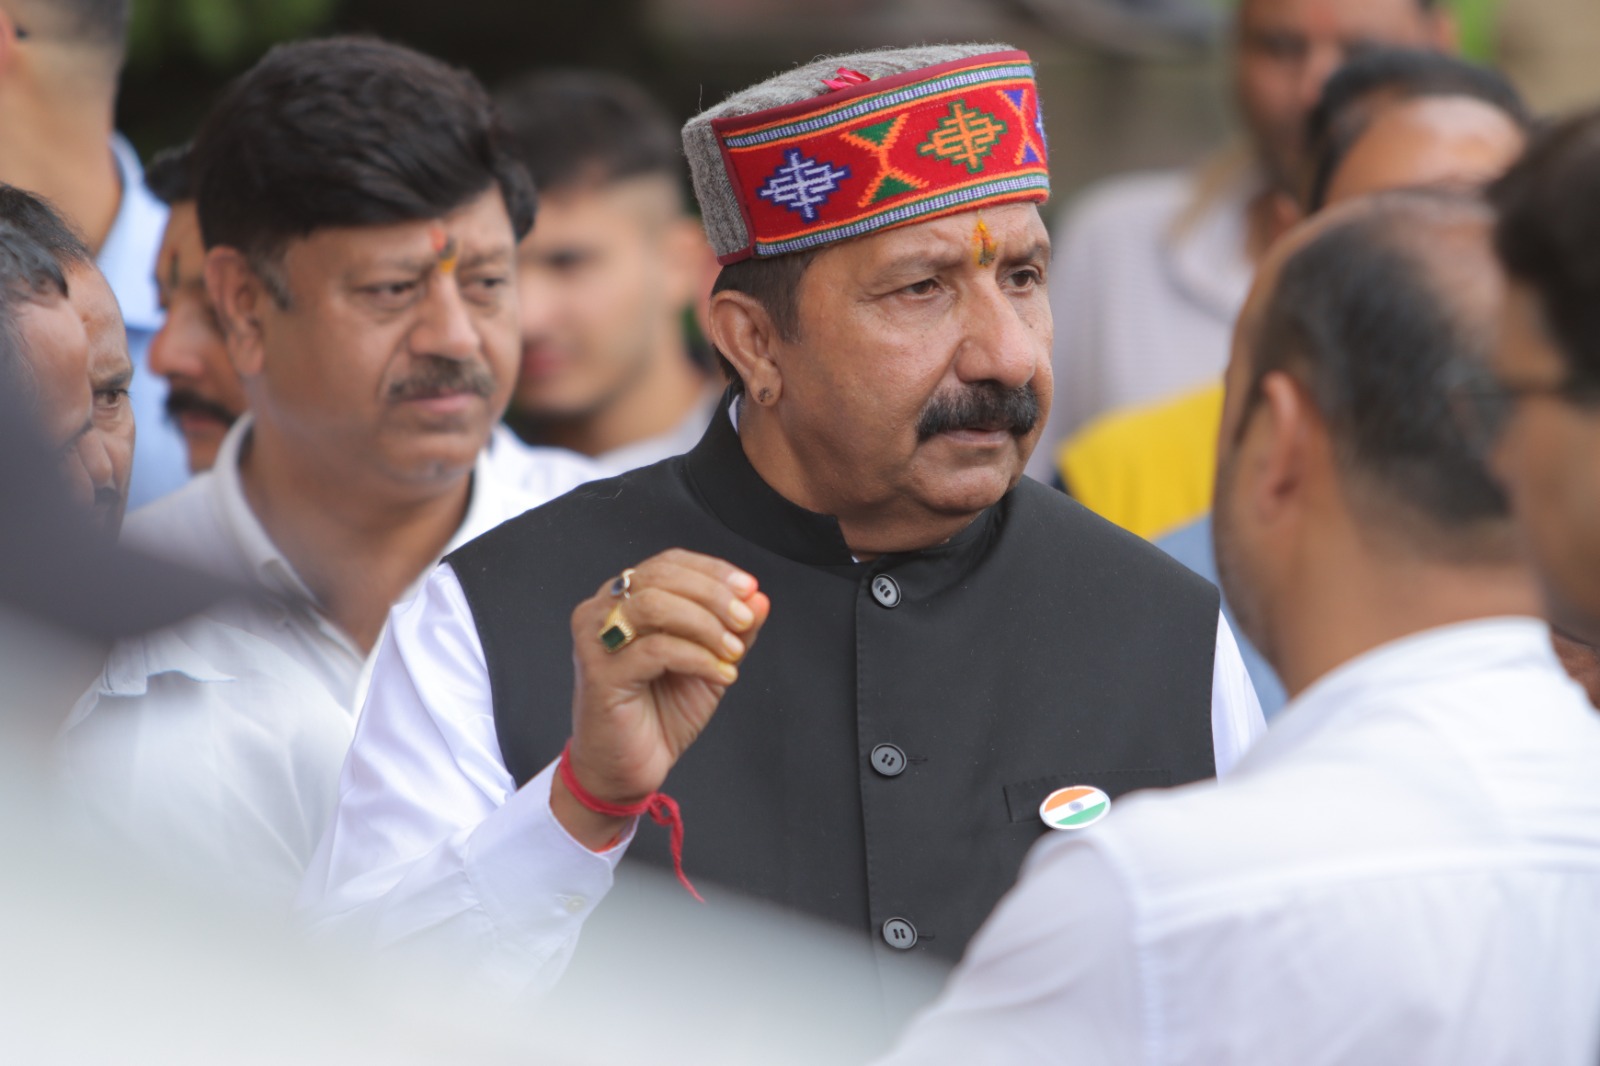 Himachal Pradesh Deputy Chief Minister Mukesh Agnihotri